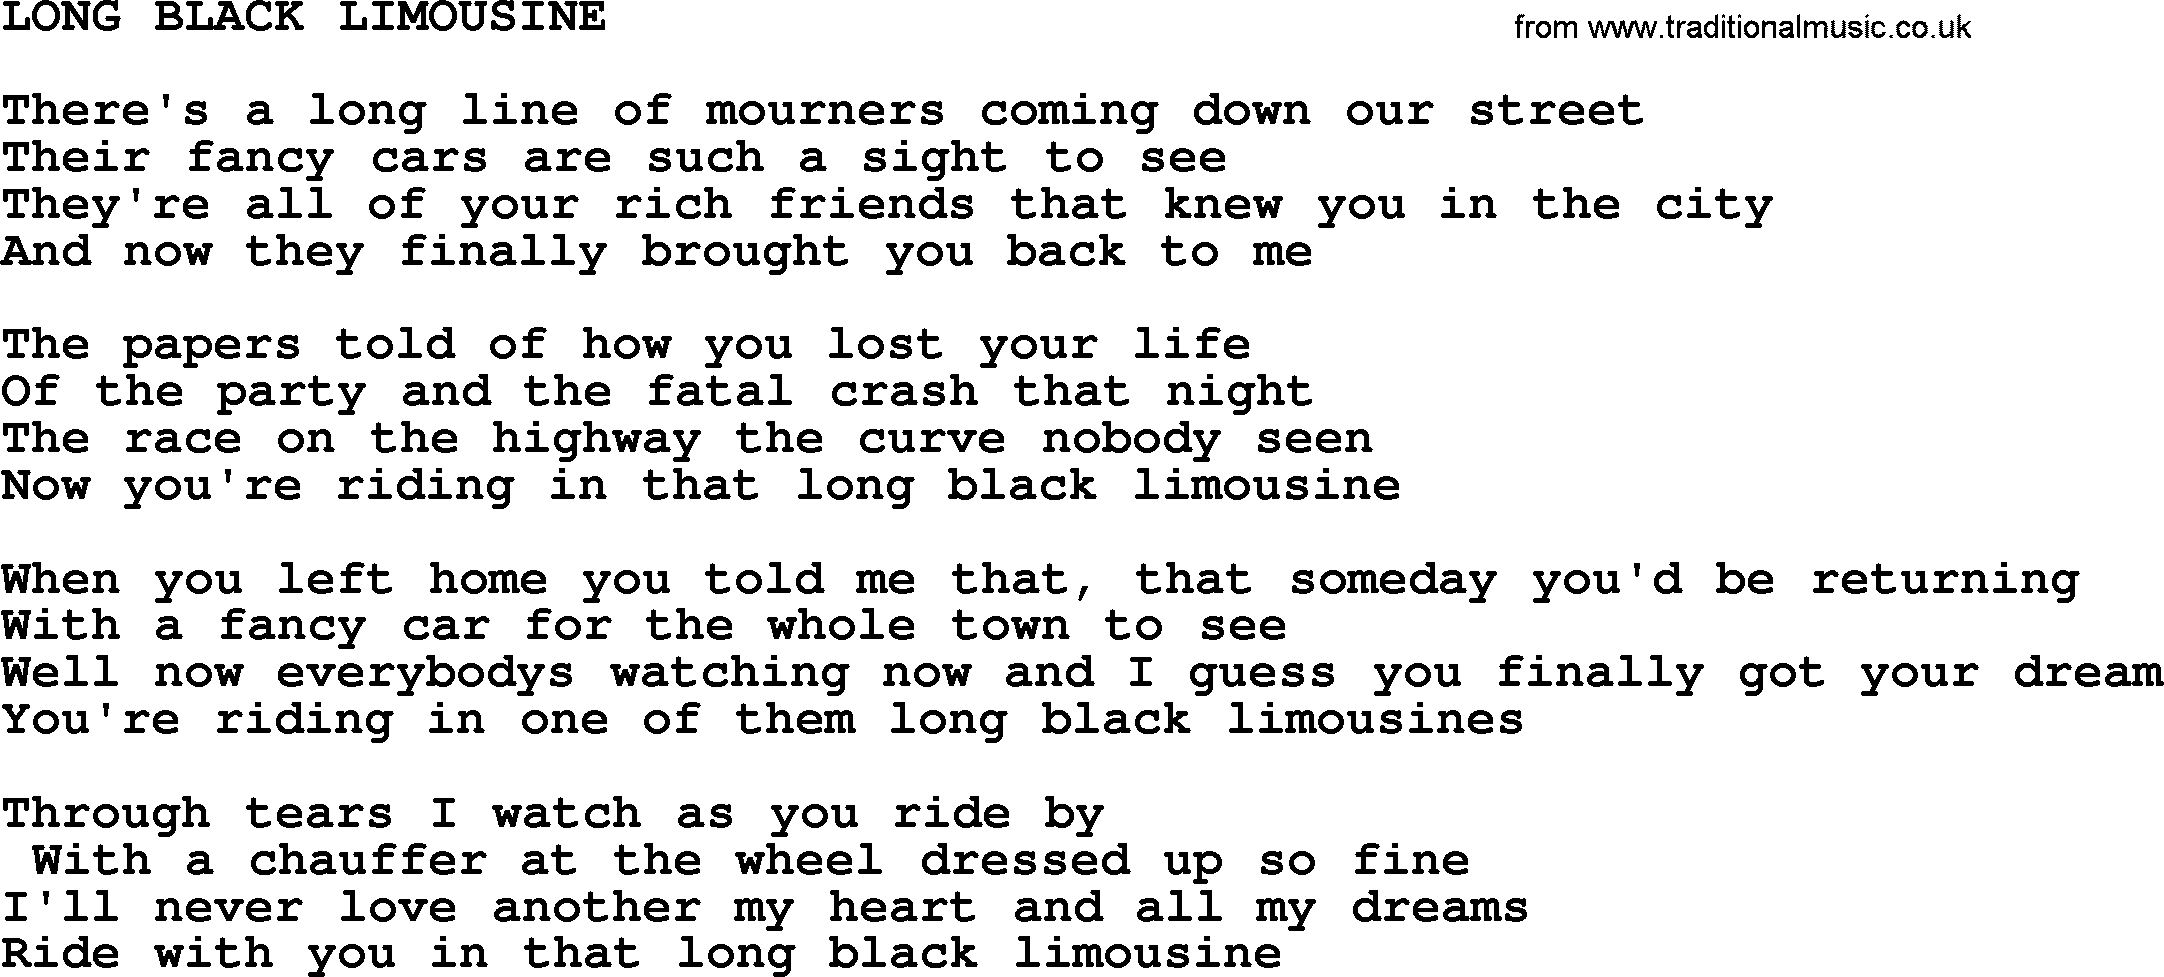 Merle Haggard song: Long Black Limousine, lyrics.